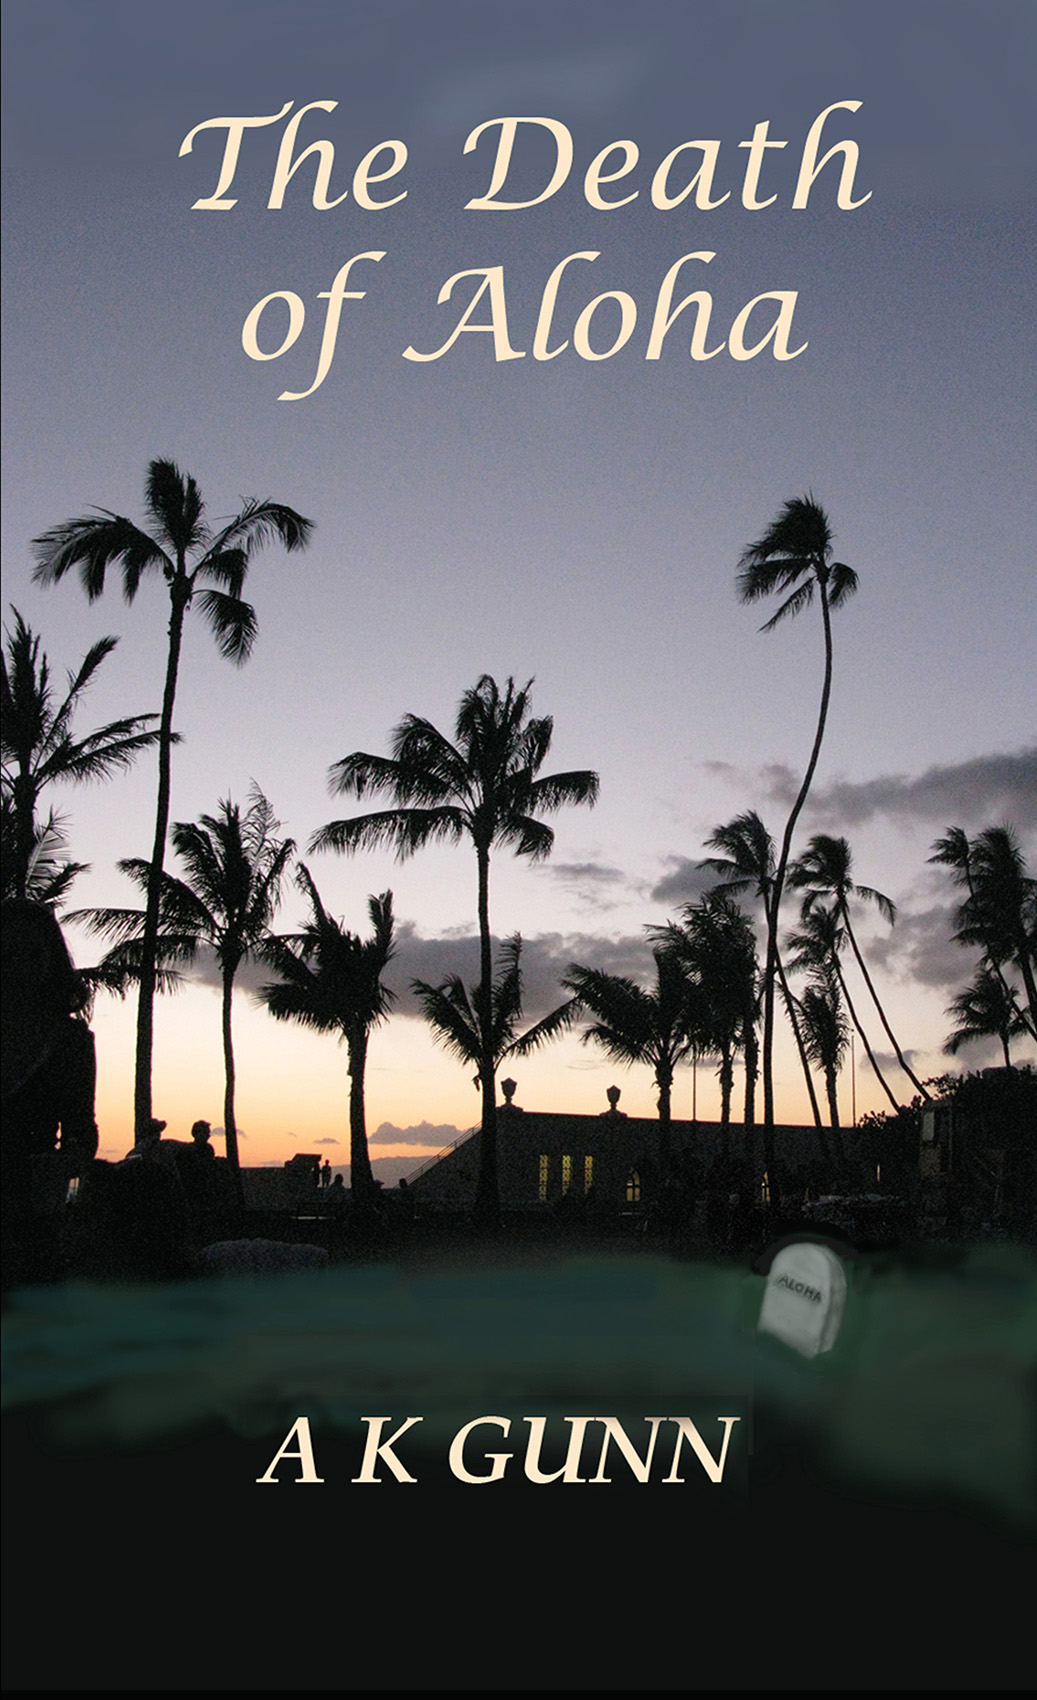 The Death of Aloha